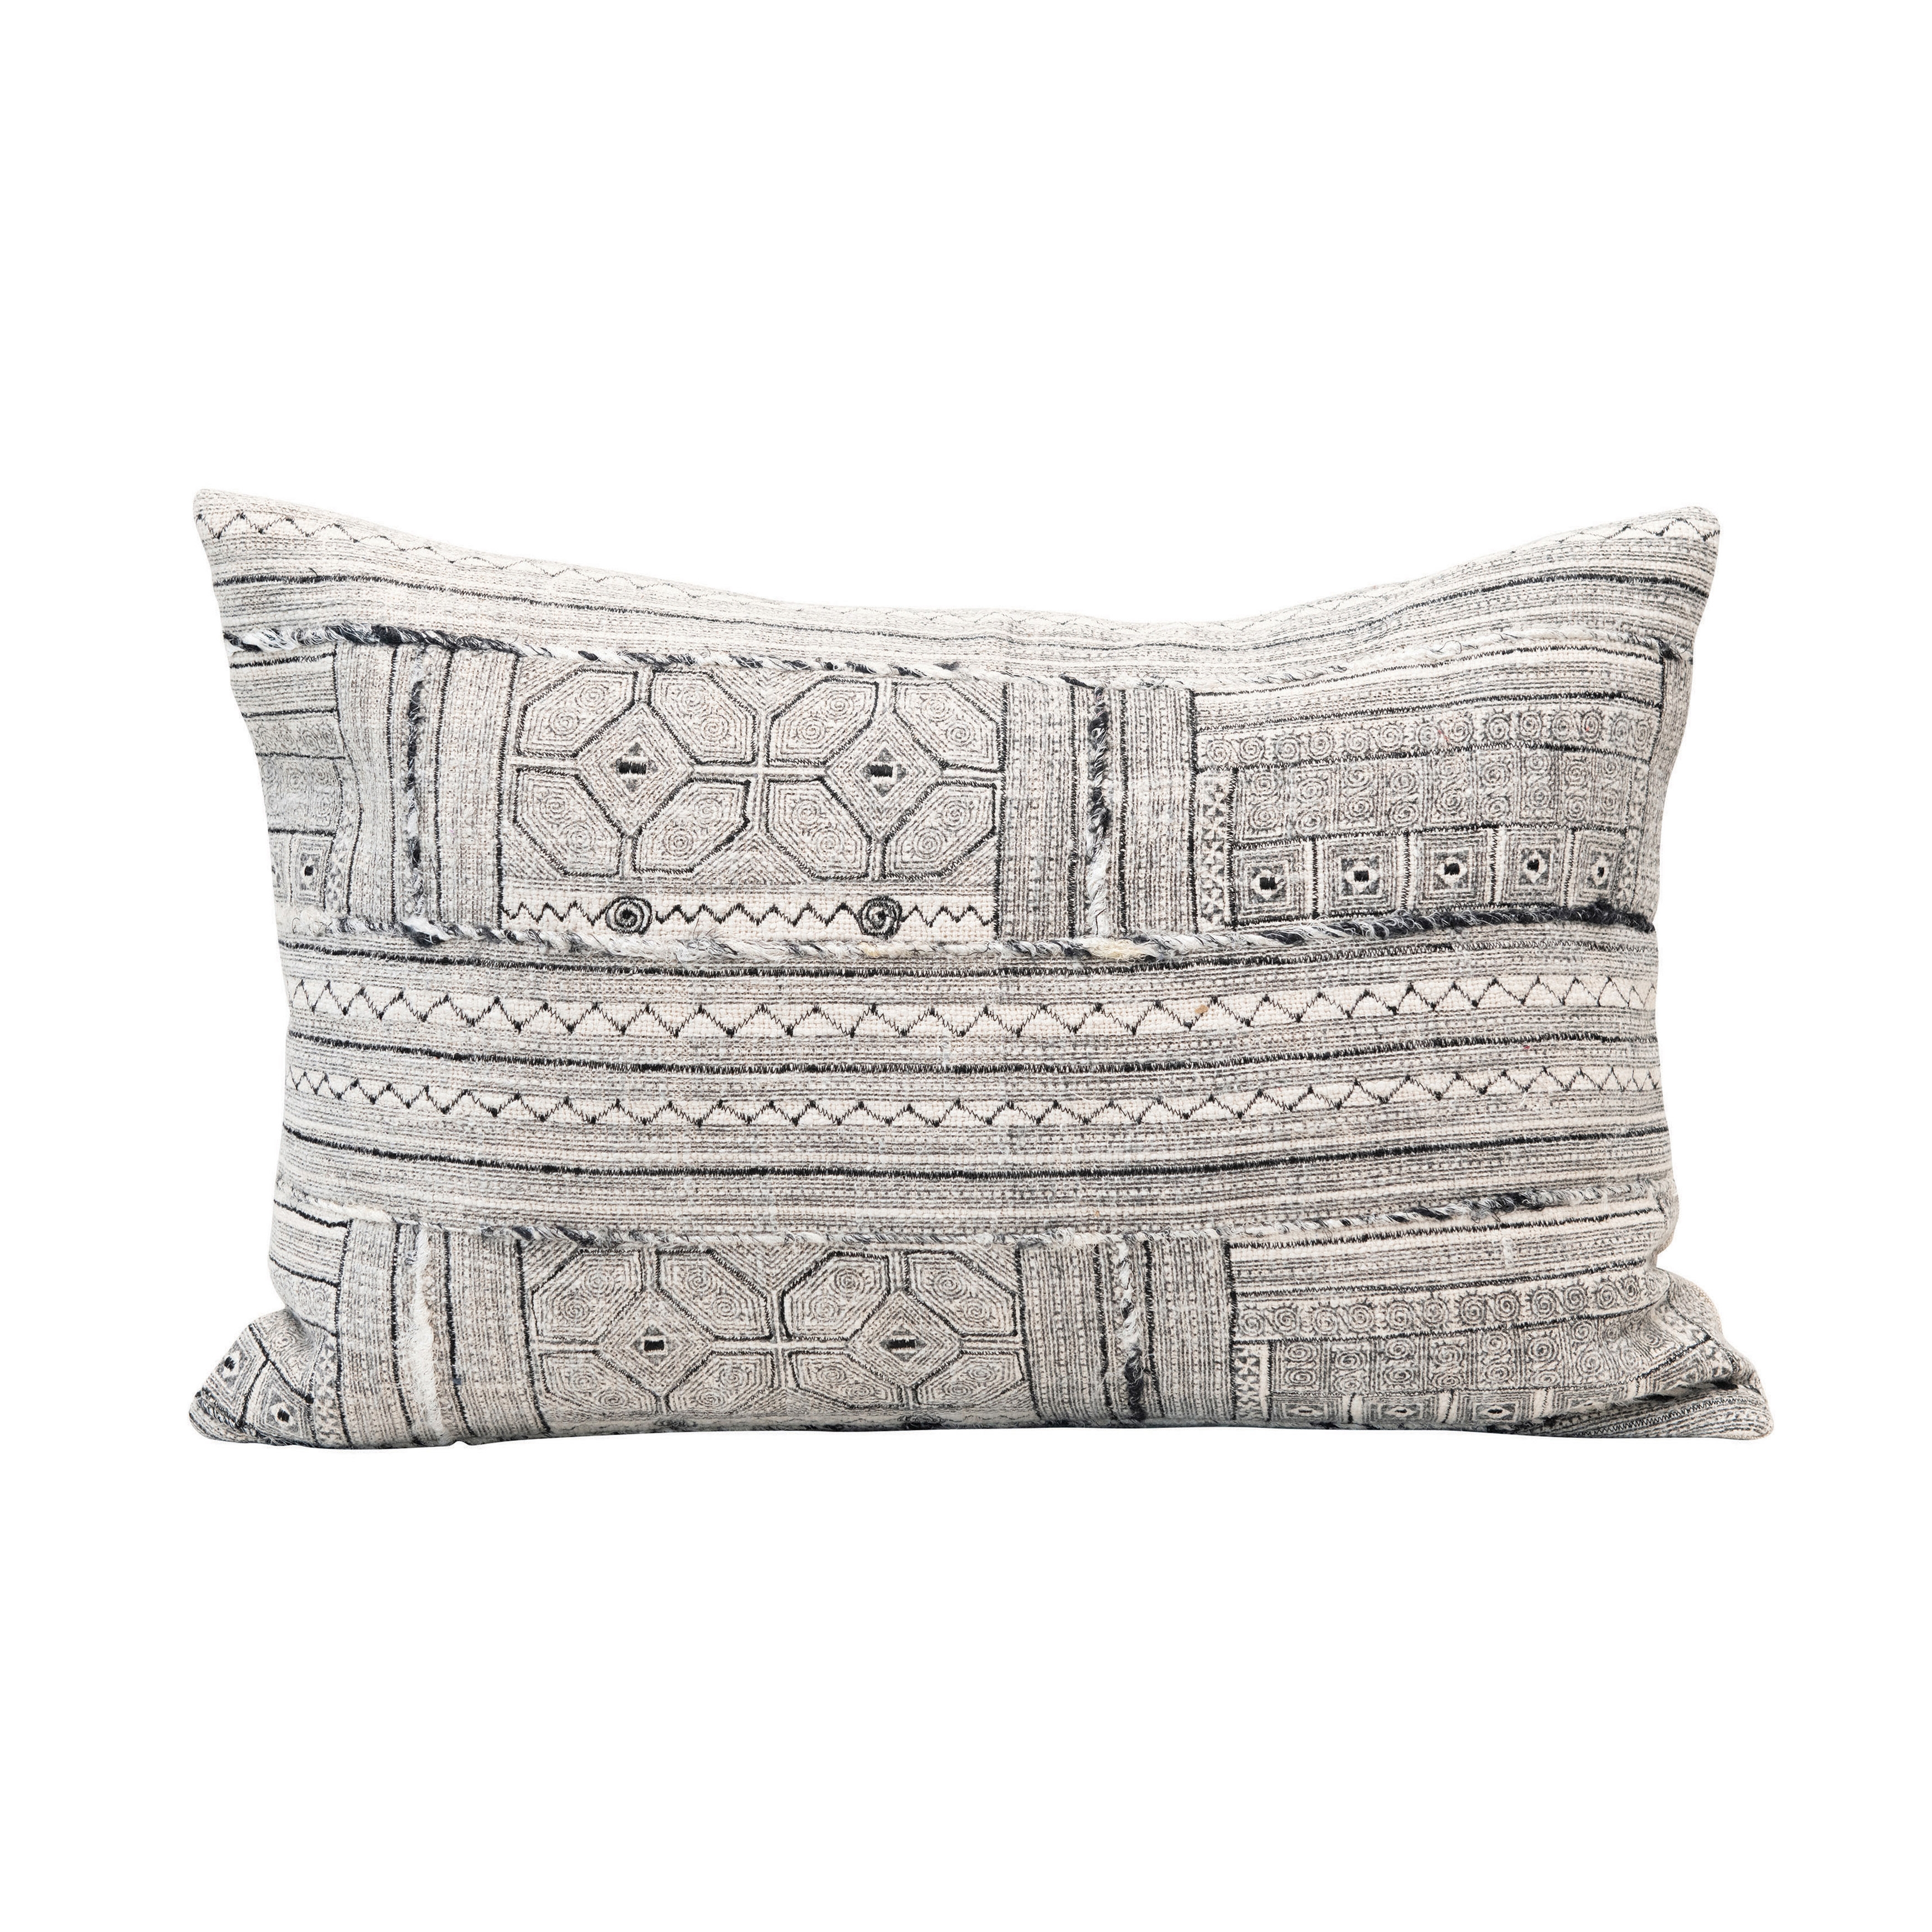 Embroidered Cotton Lumbar Pillow, Black & White - Image 0